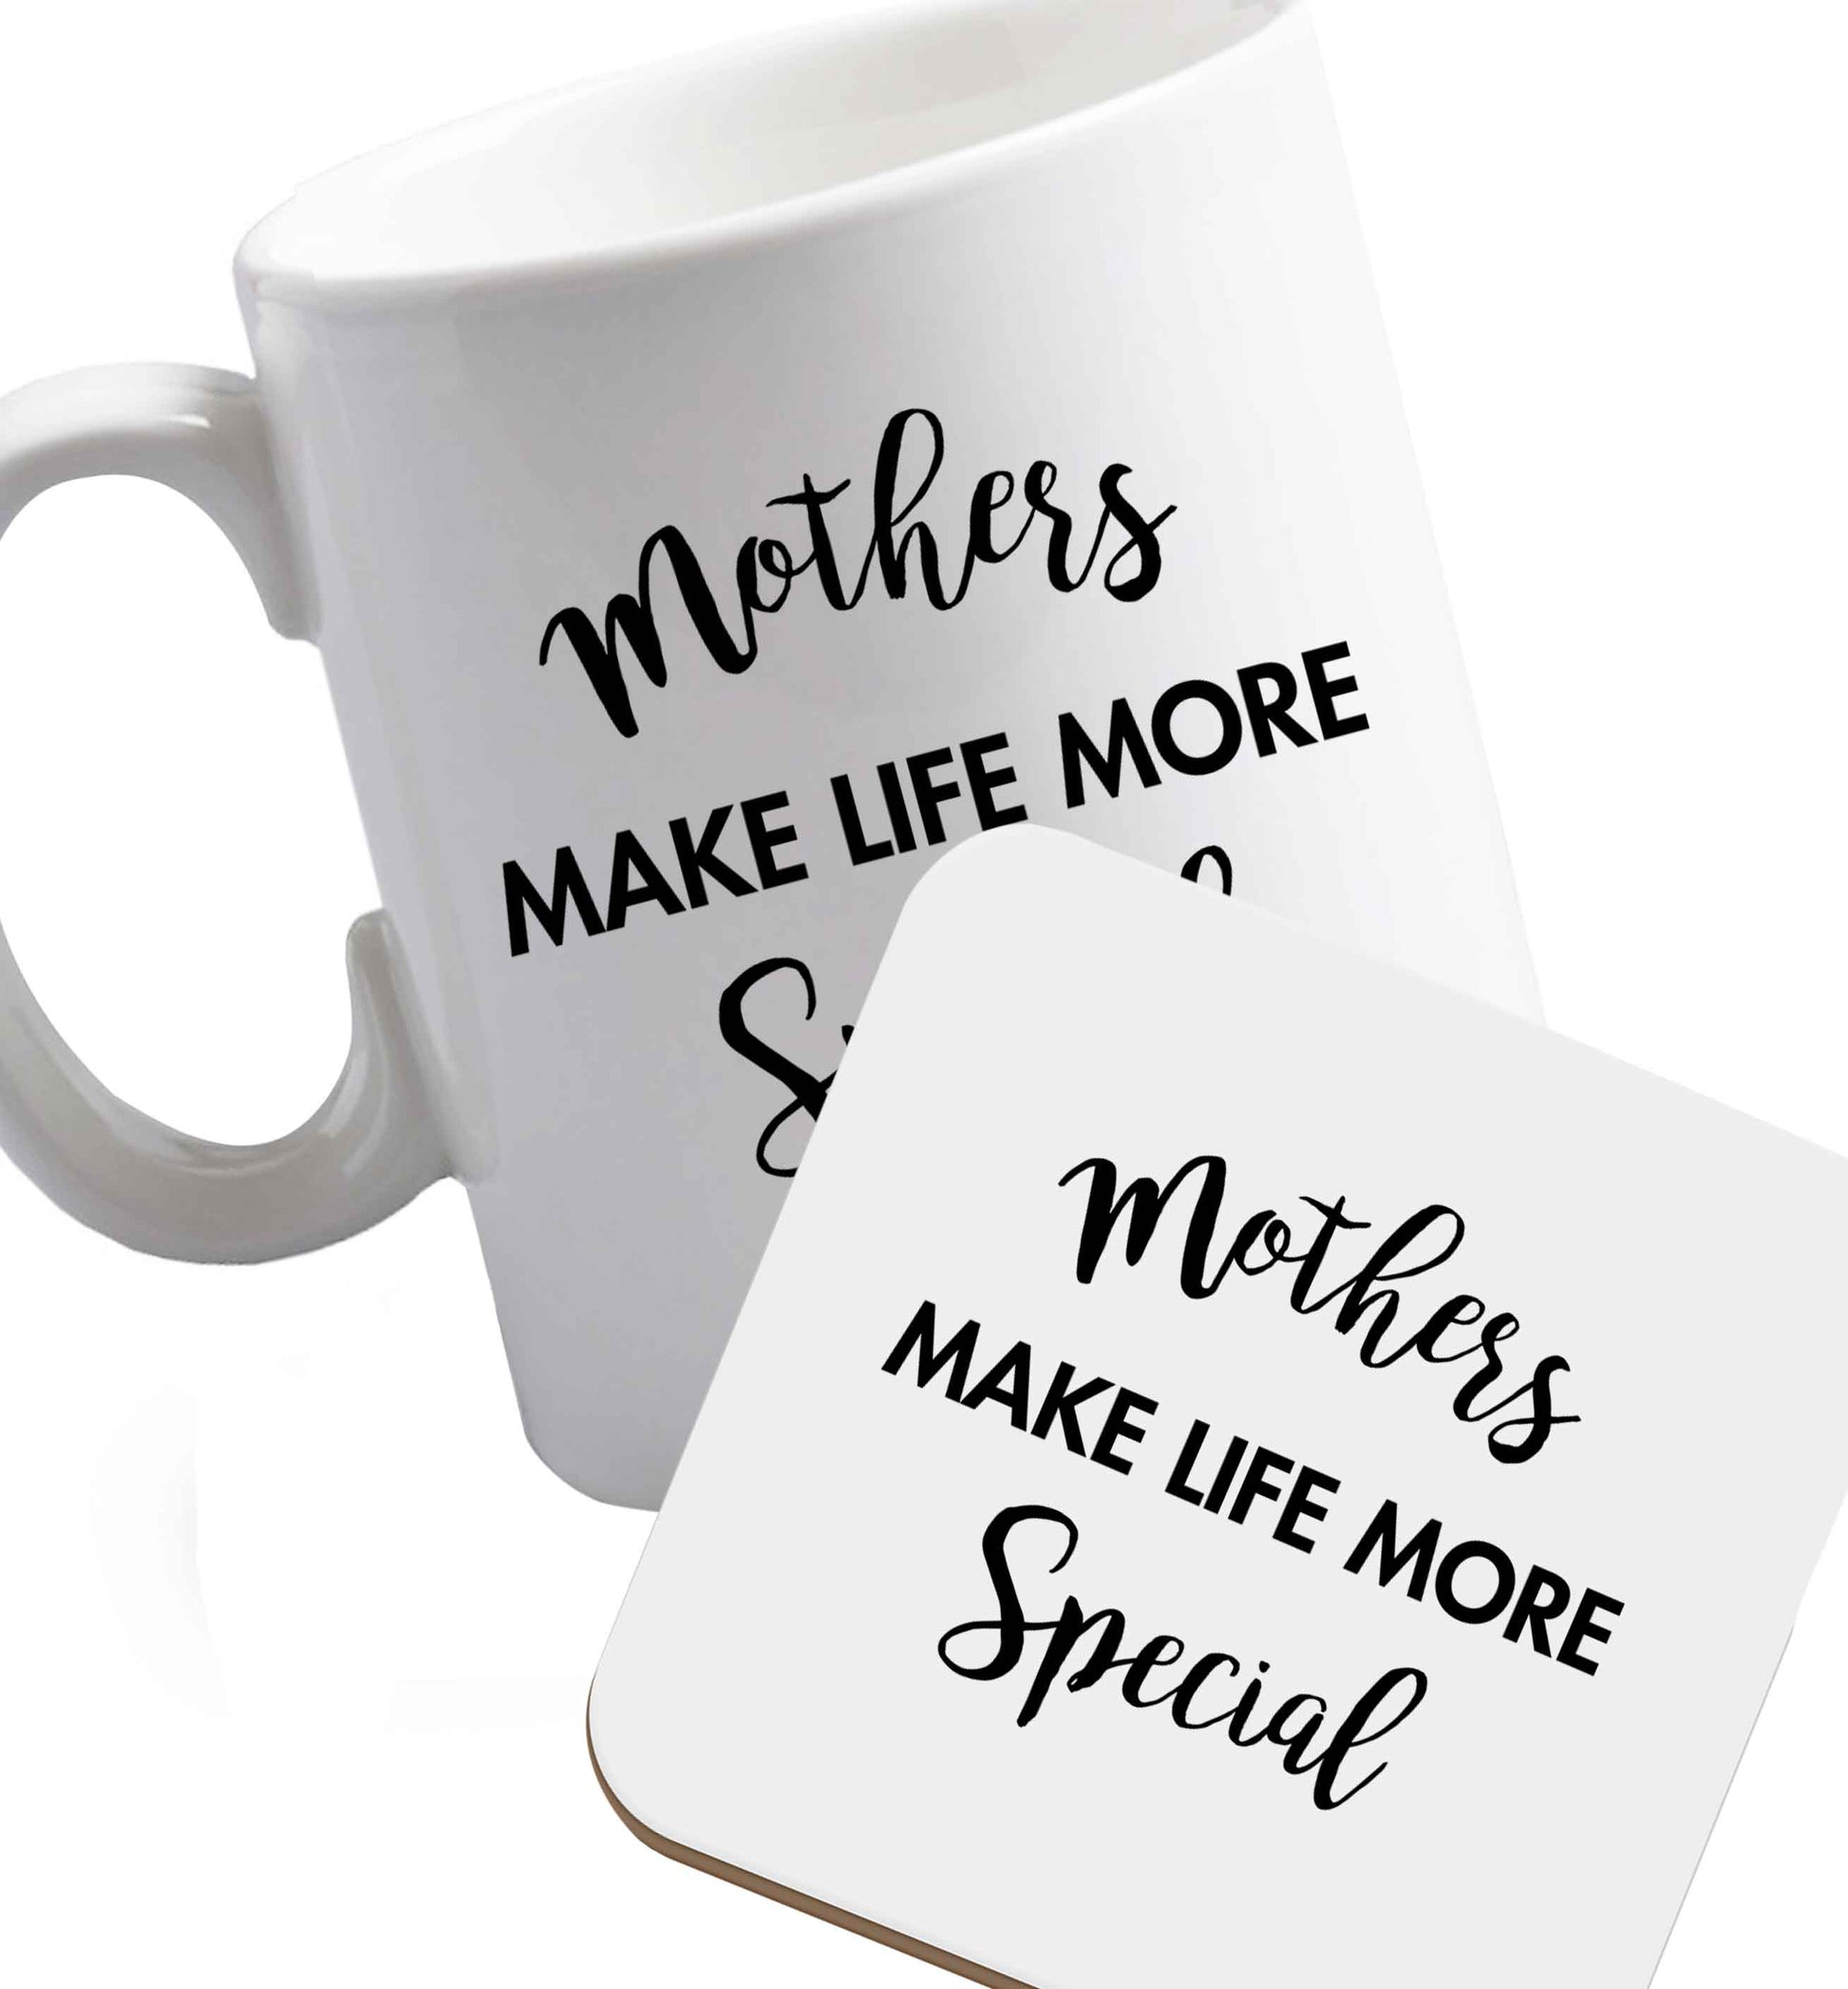 10 oz Mother's make life more special ceramic mug and coaster set right handed